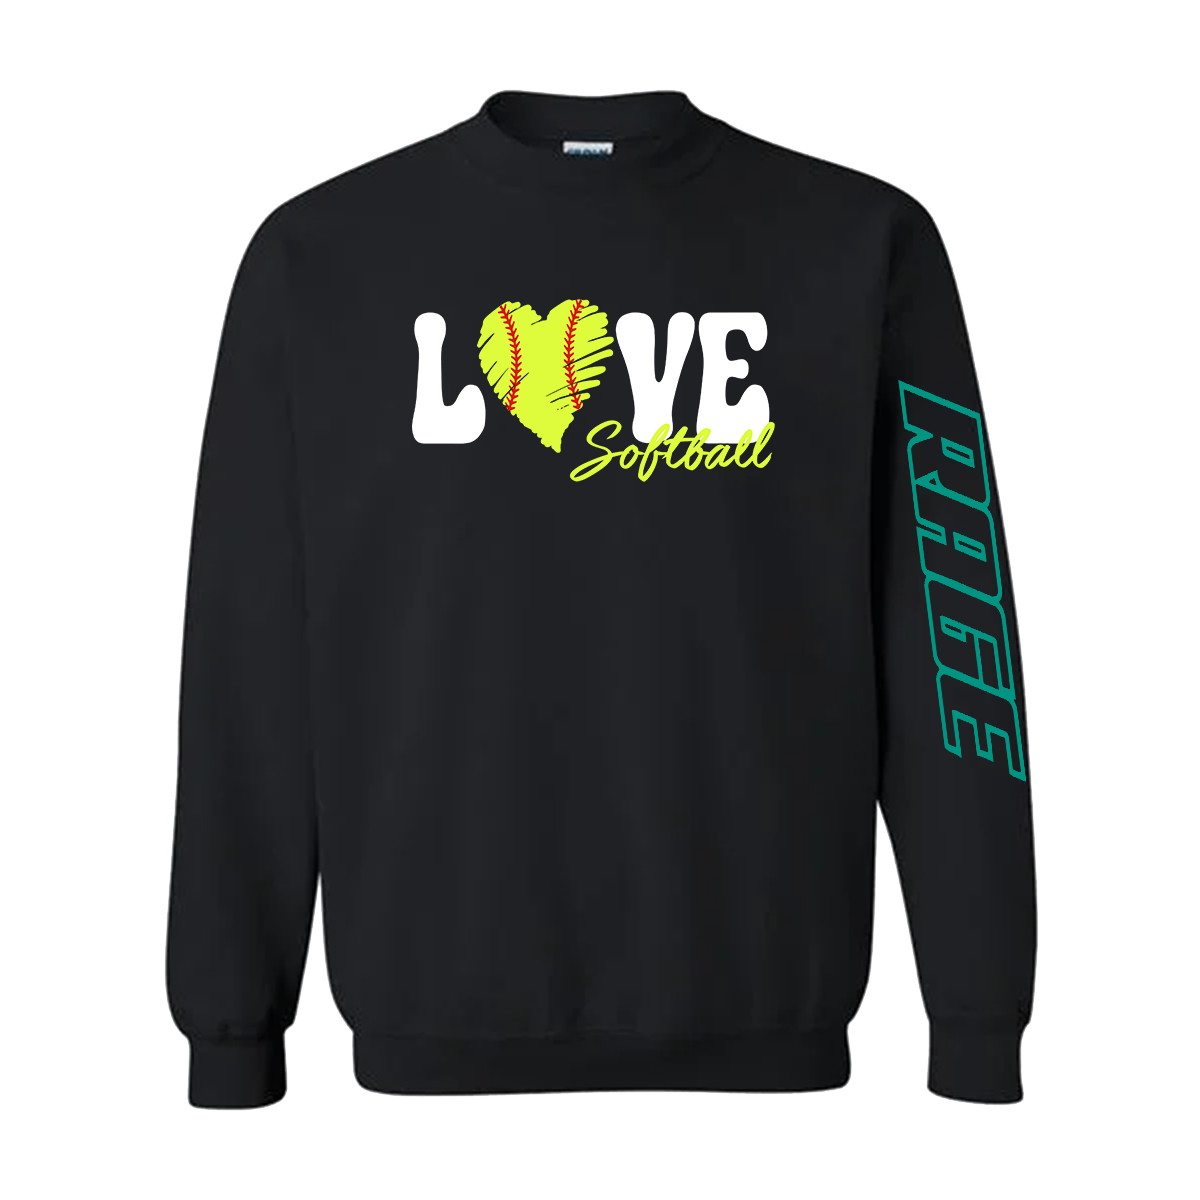 Love Softball Crewneck Sweatshirt